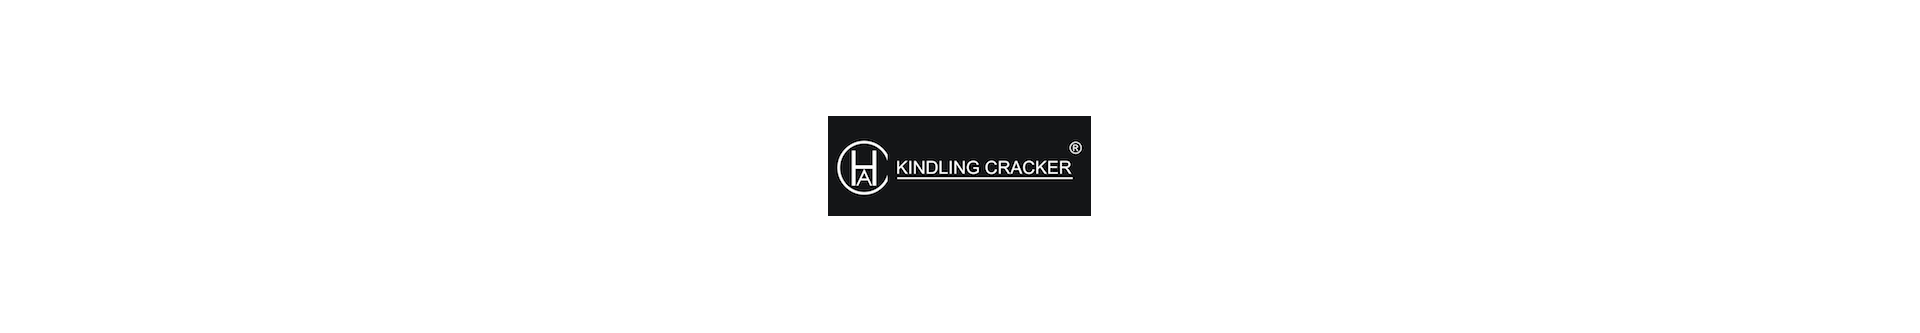 KINDLING CRACKER